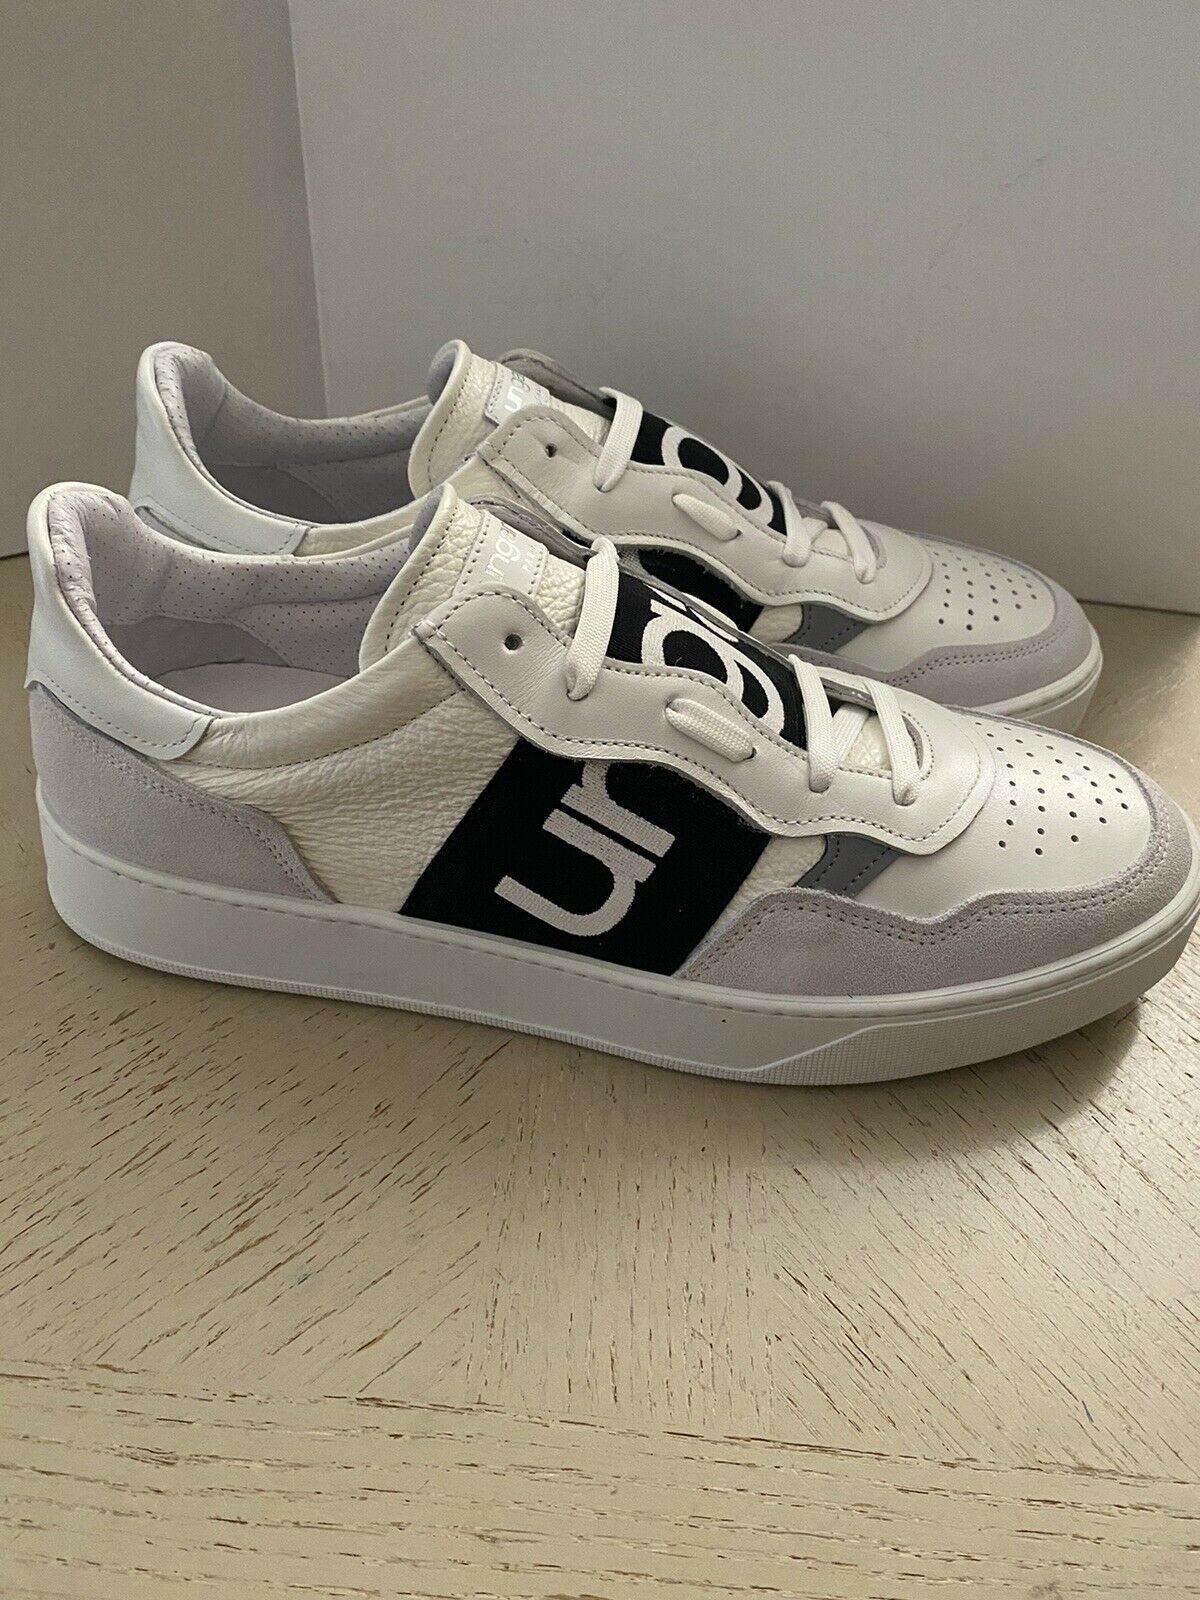 Neue Ungaro Herren Sneakers Schuhe Weiß 10 US (43 Eu) Italien